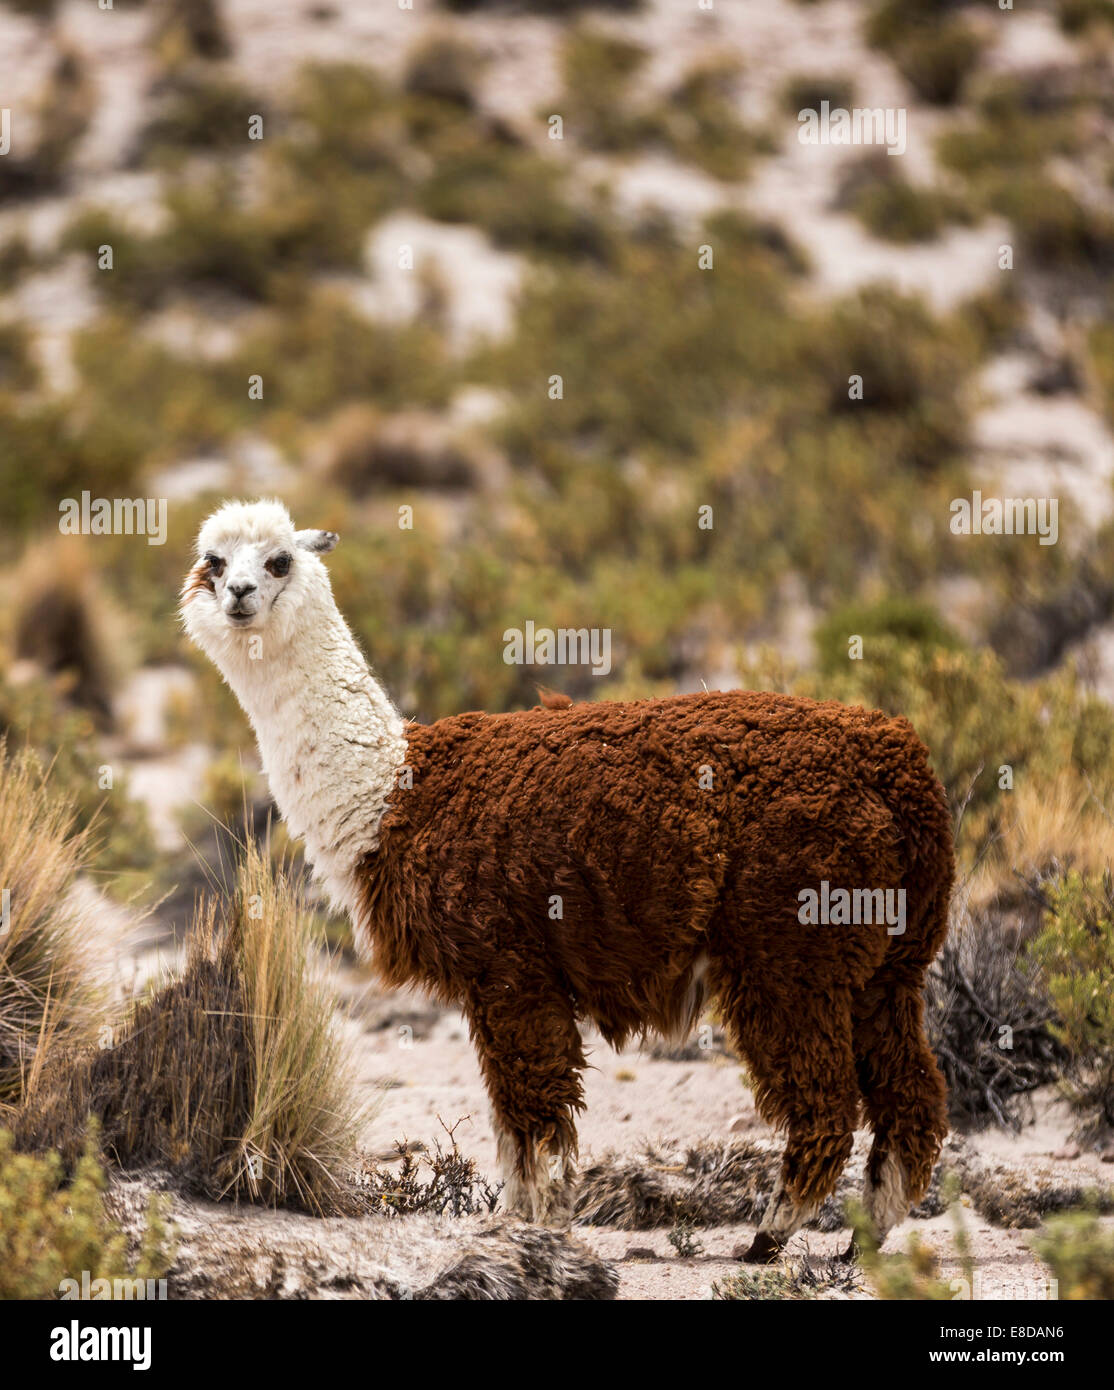 Alpaca (Vicugna pacos), Désert d'Atacama, l'Altiplano, hauts plateaux, Bolivie Banque D'Images